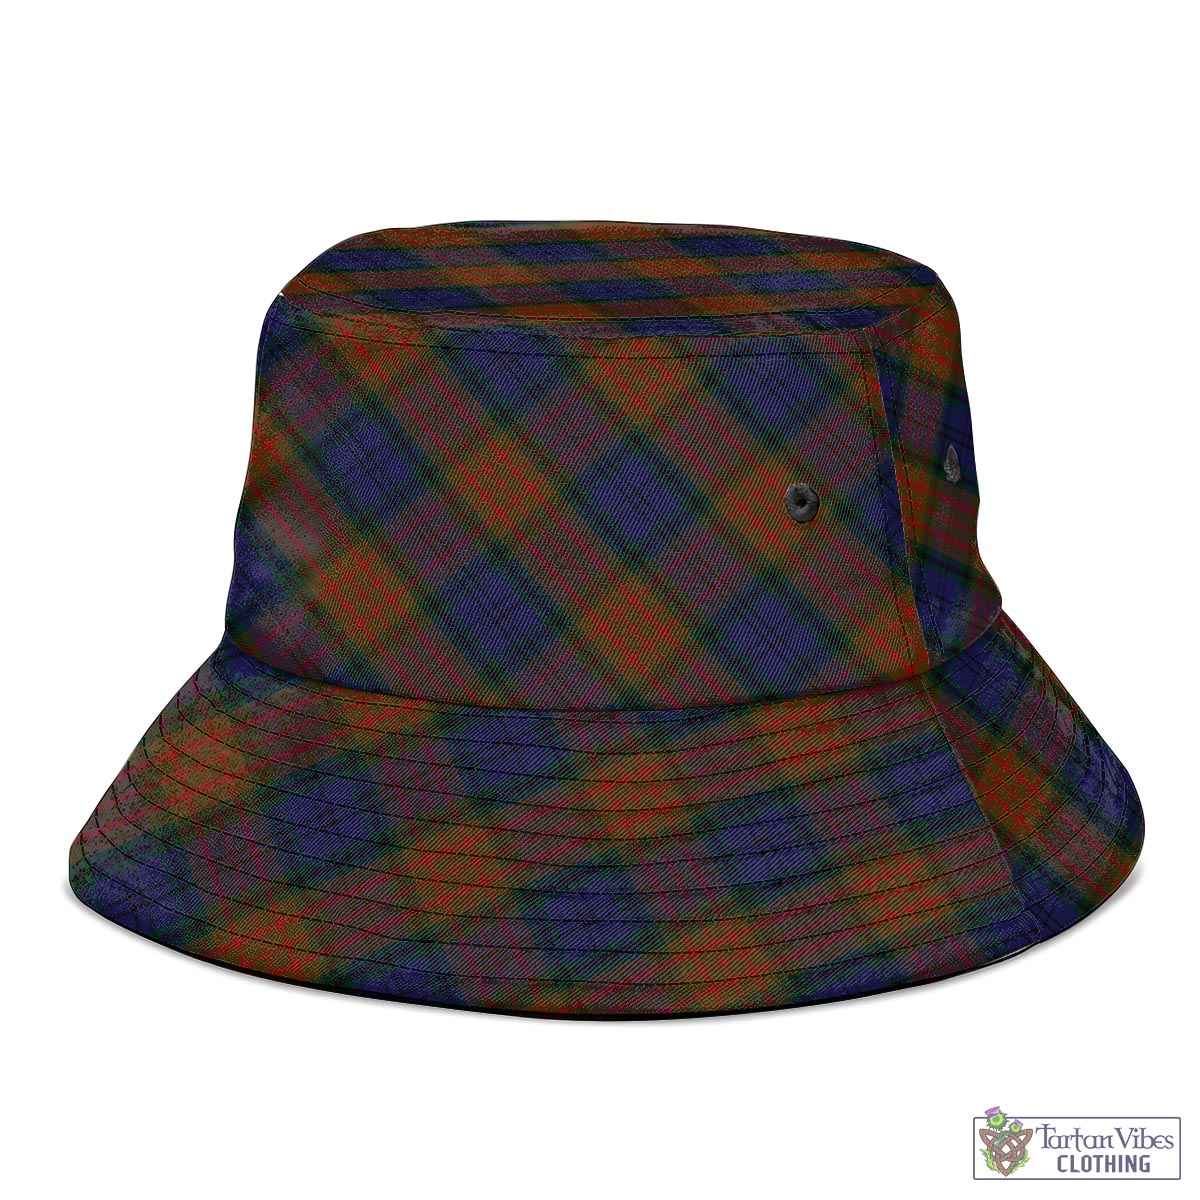 Tartan Vibes Clothing Longford County Ireland Tartan Bucket Hat